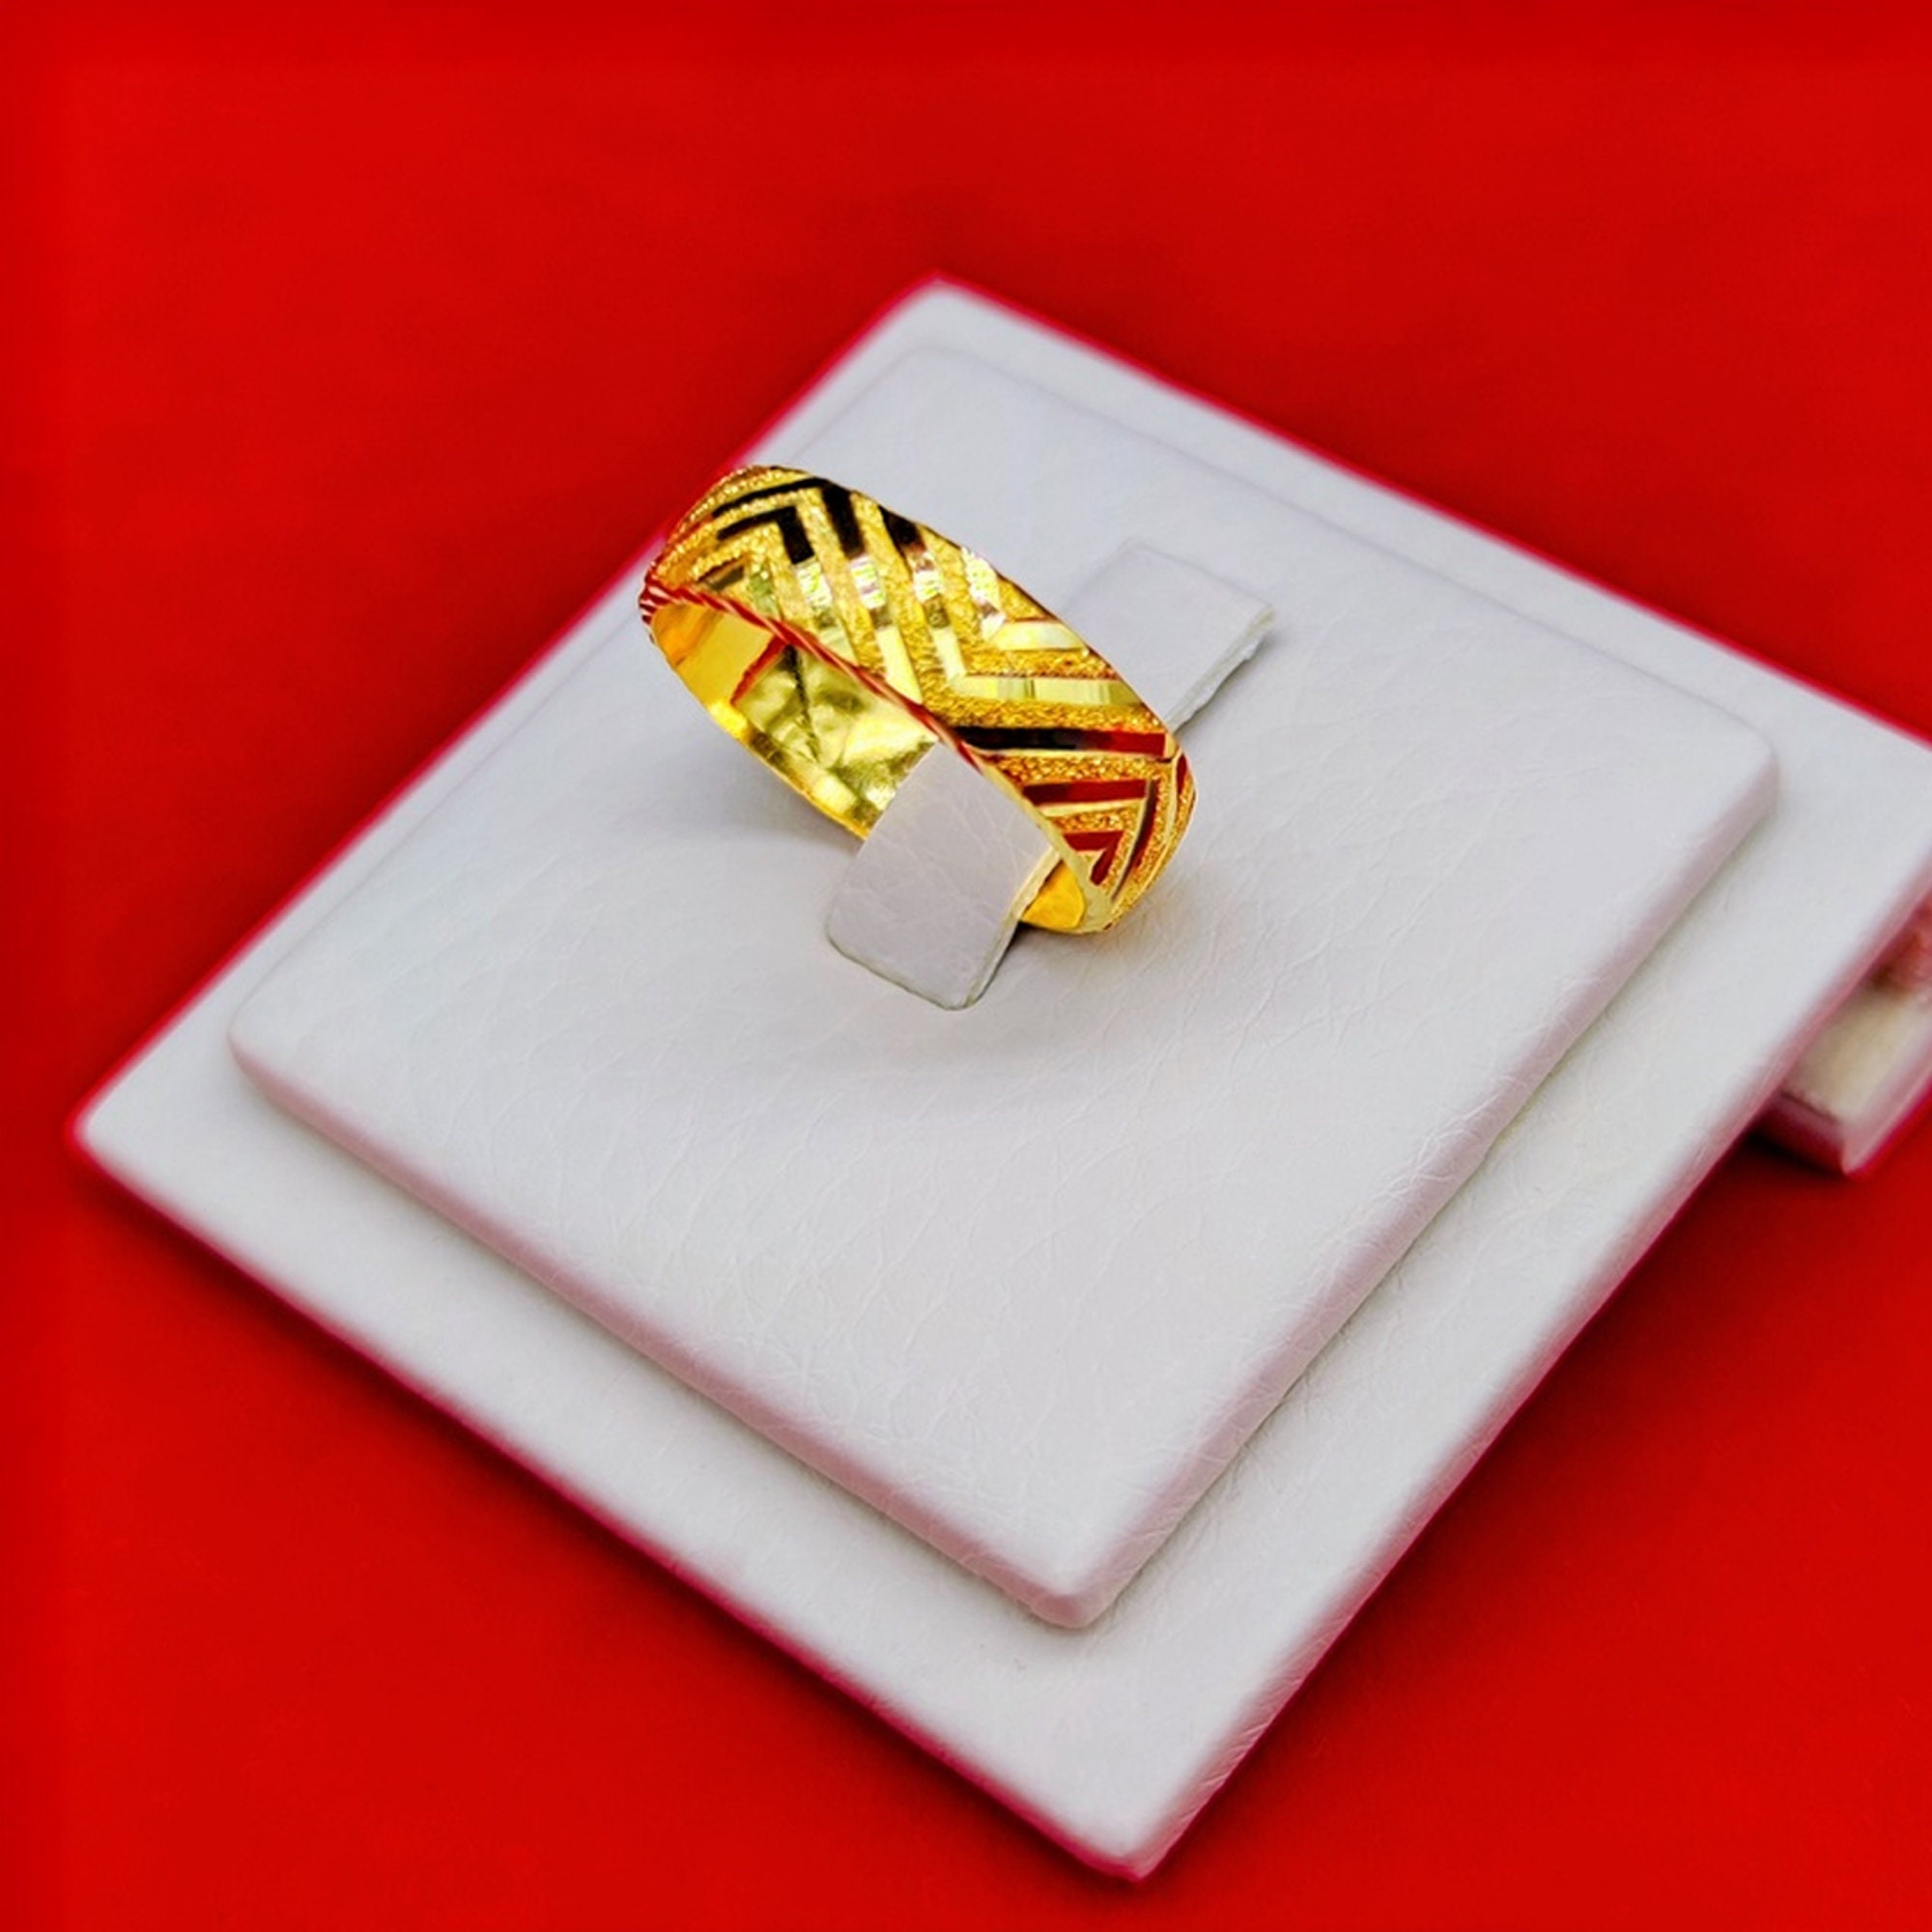 Metal Printed Mahna Jewellers 22K Yellow Gold Ring (6.59 Gms) at Rs 23100  in New Delhi